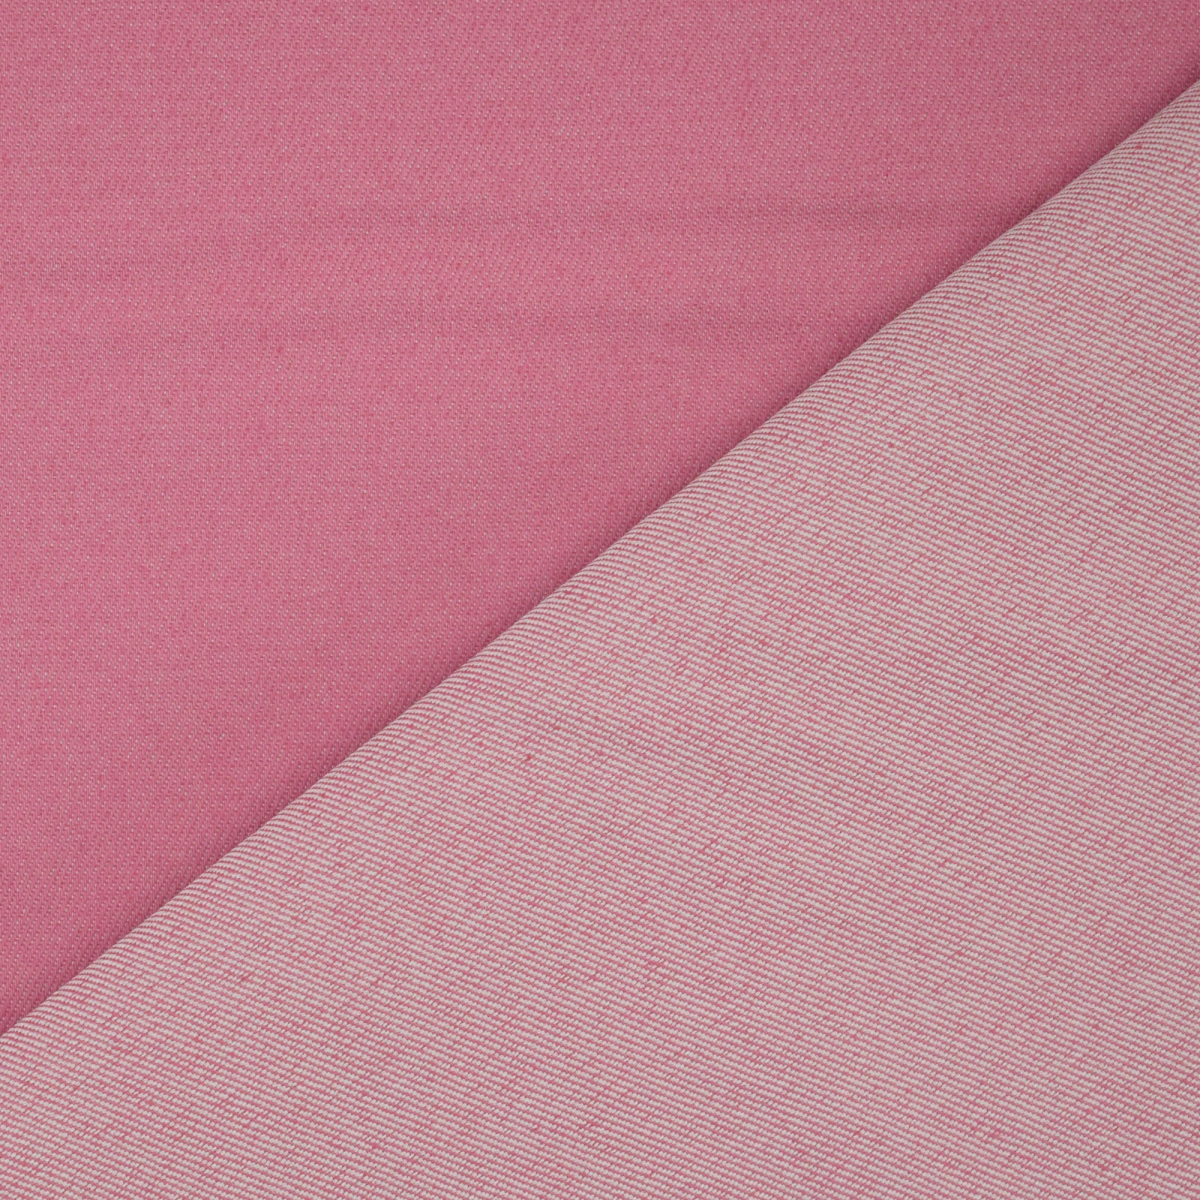 Pink Stretch Cotton Denim - Bloomsbury Square Dressmaking Fabric